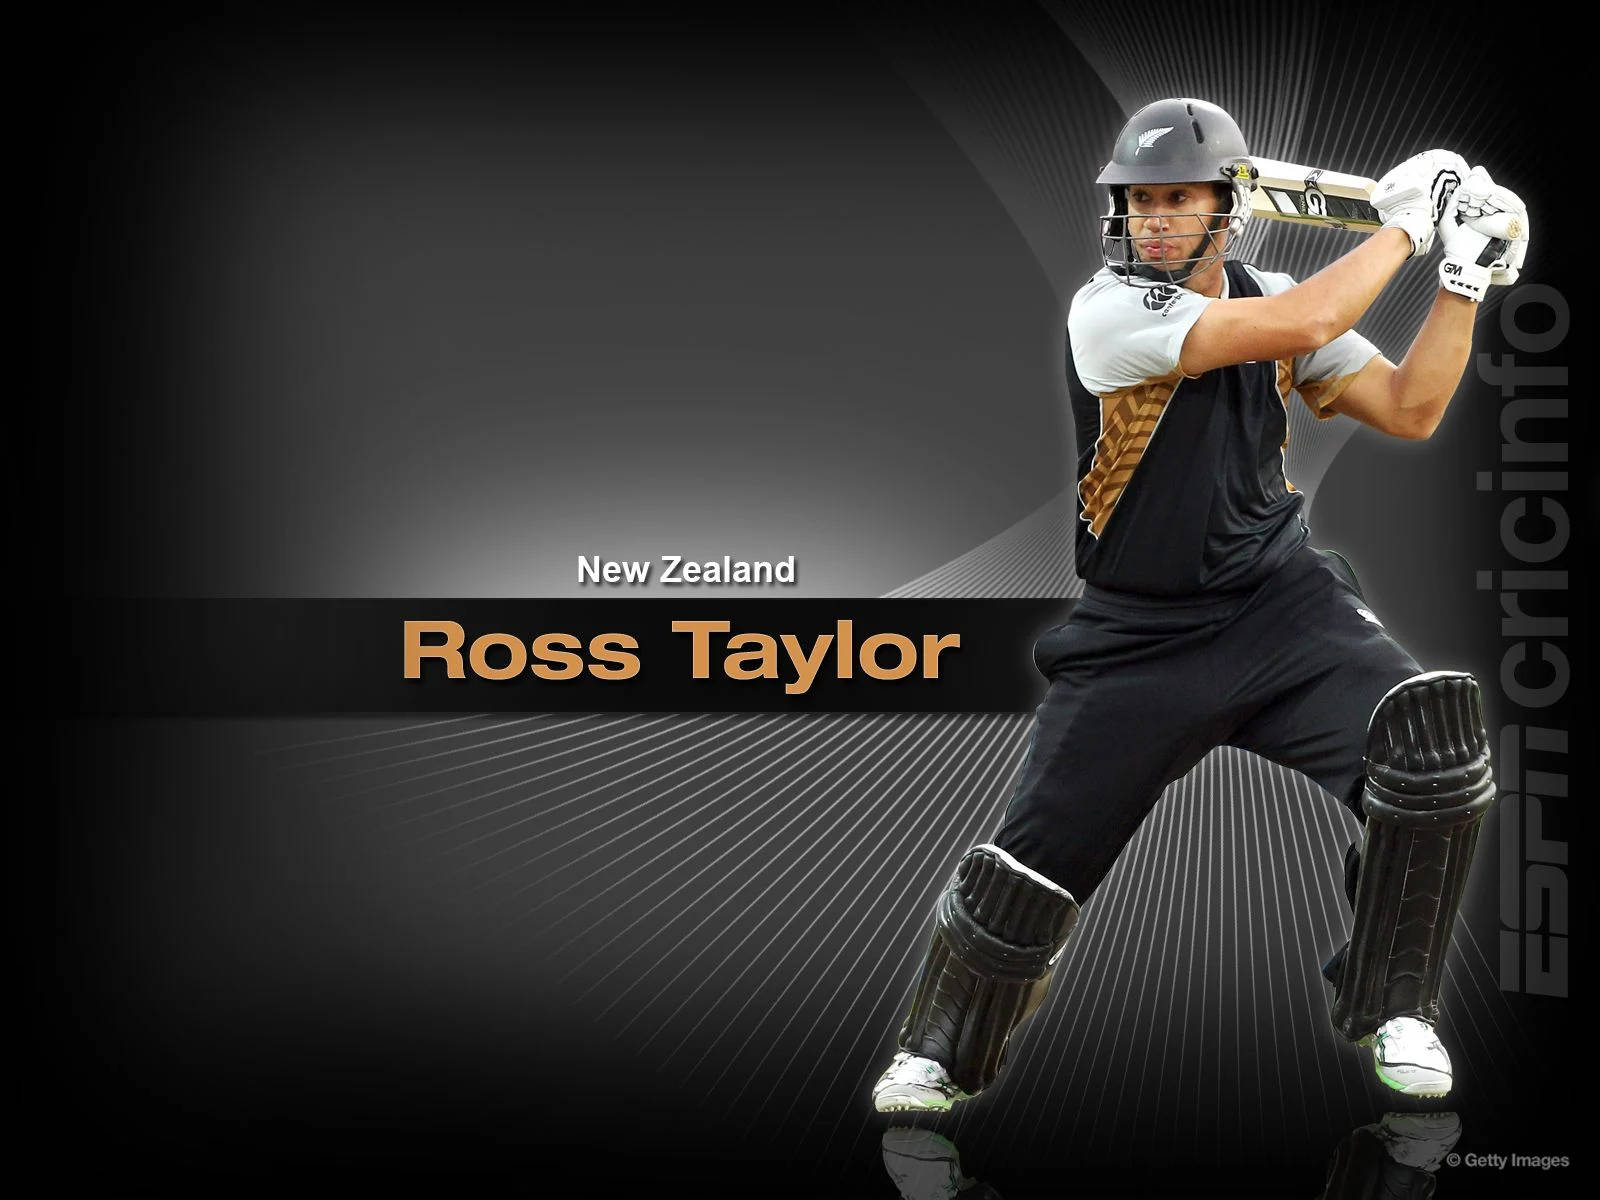 Download Ross Tailor Cricket Poster Wallpaper 